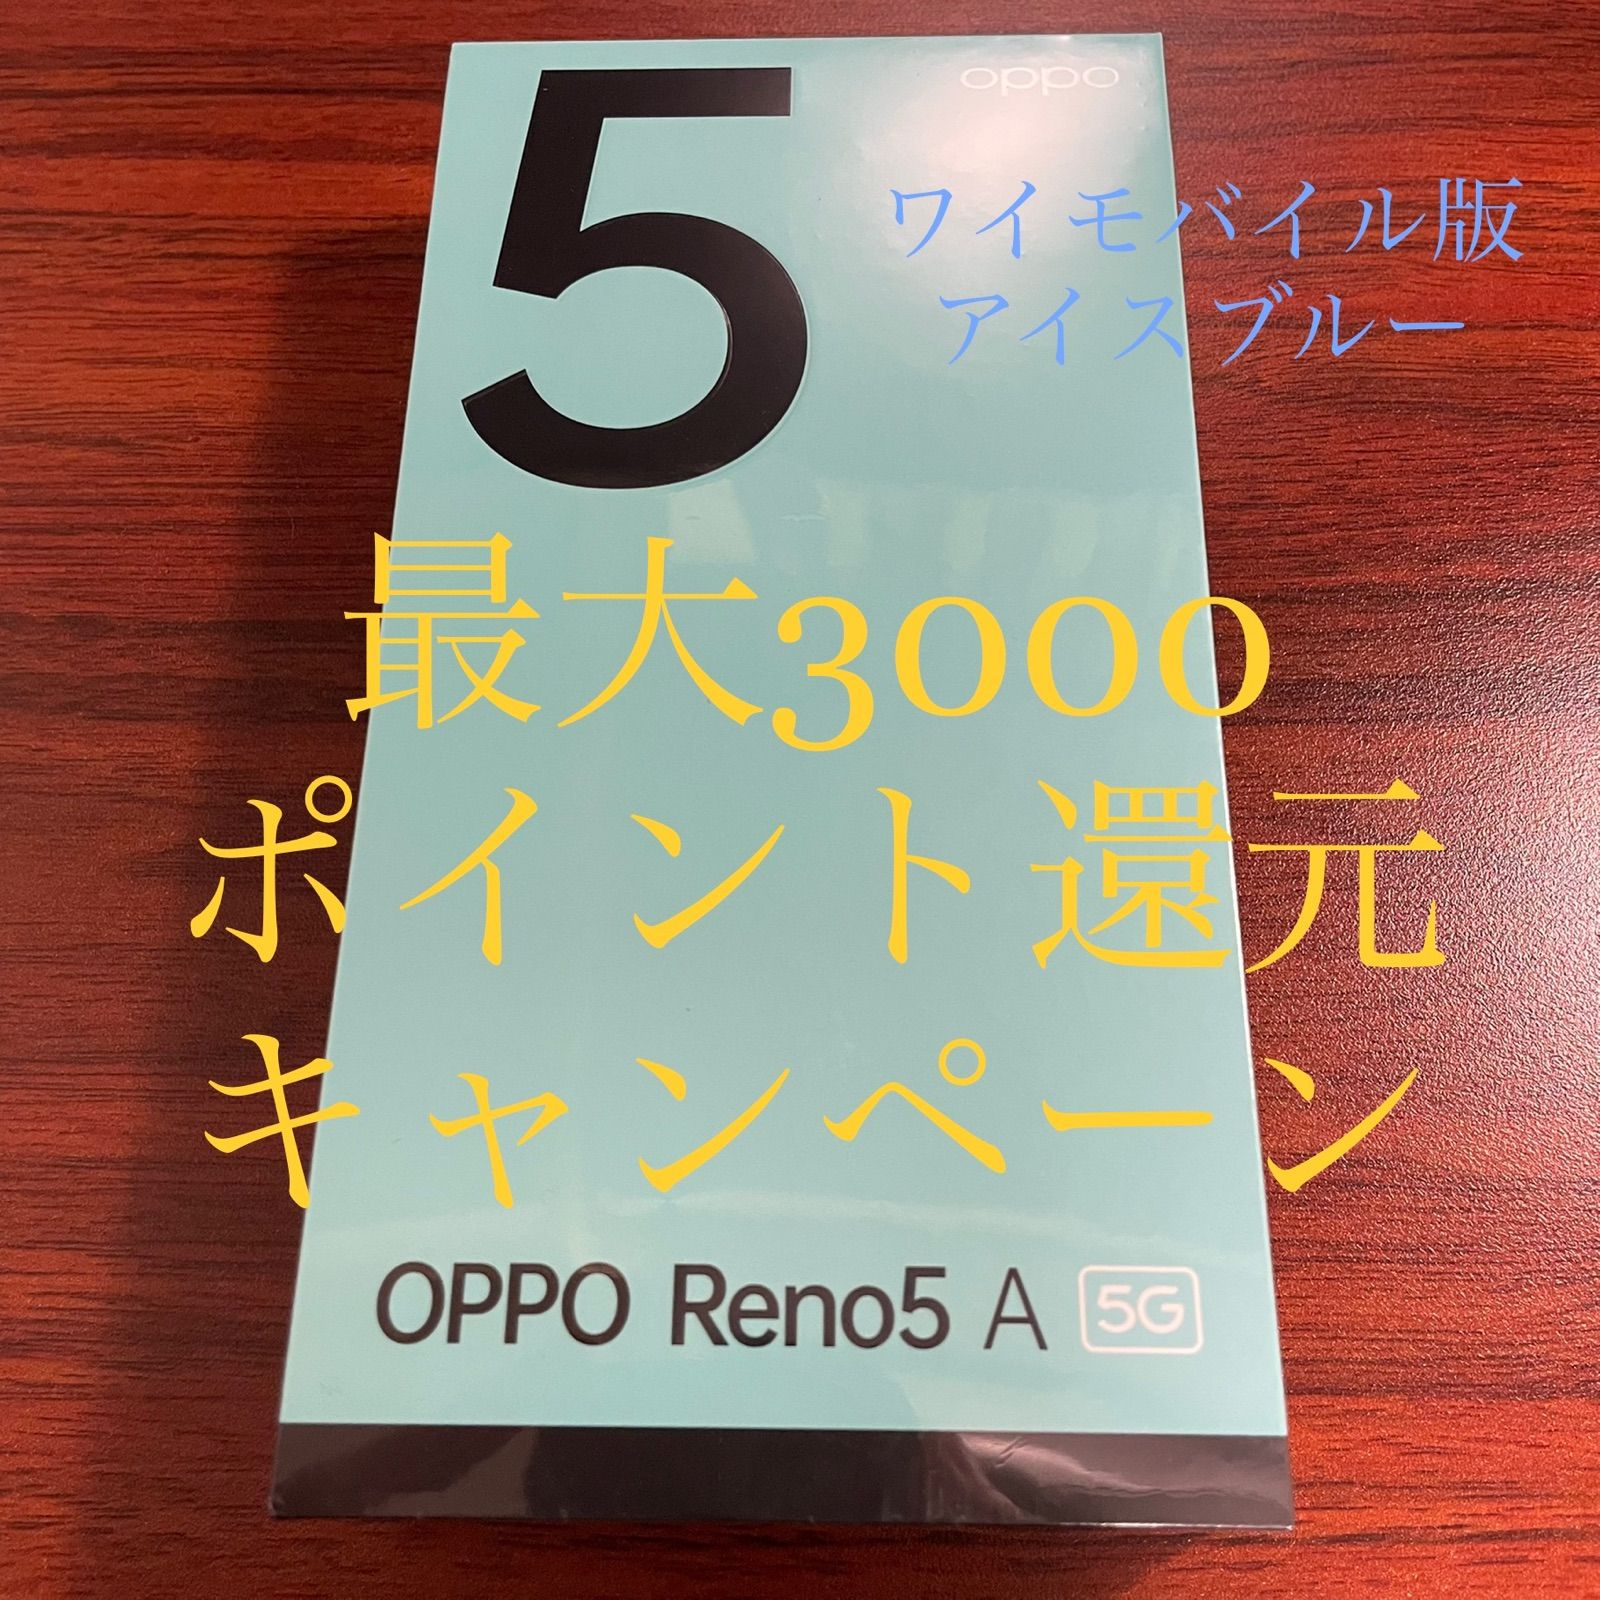 OPPO Reno5 A アイスブルー 新品未開封 ワイモバイル版 - メルカリ